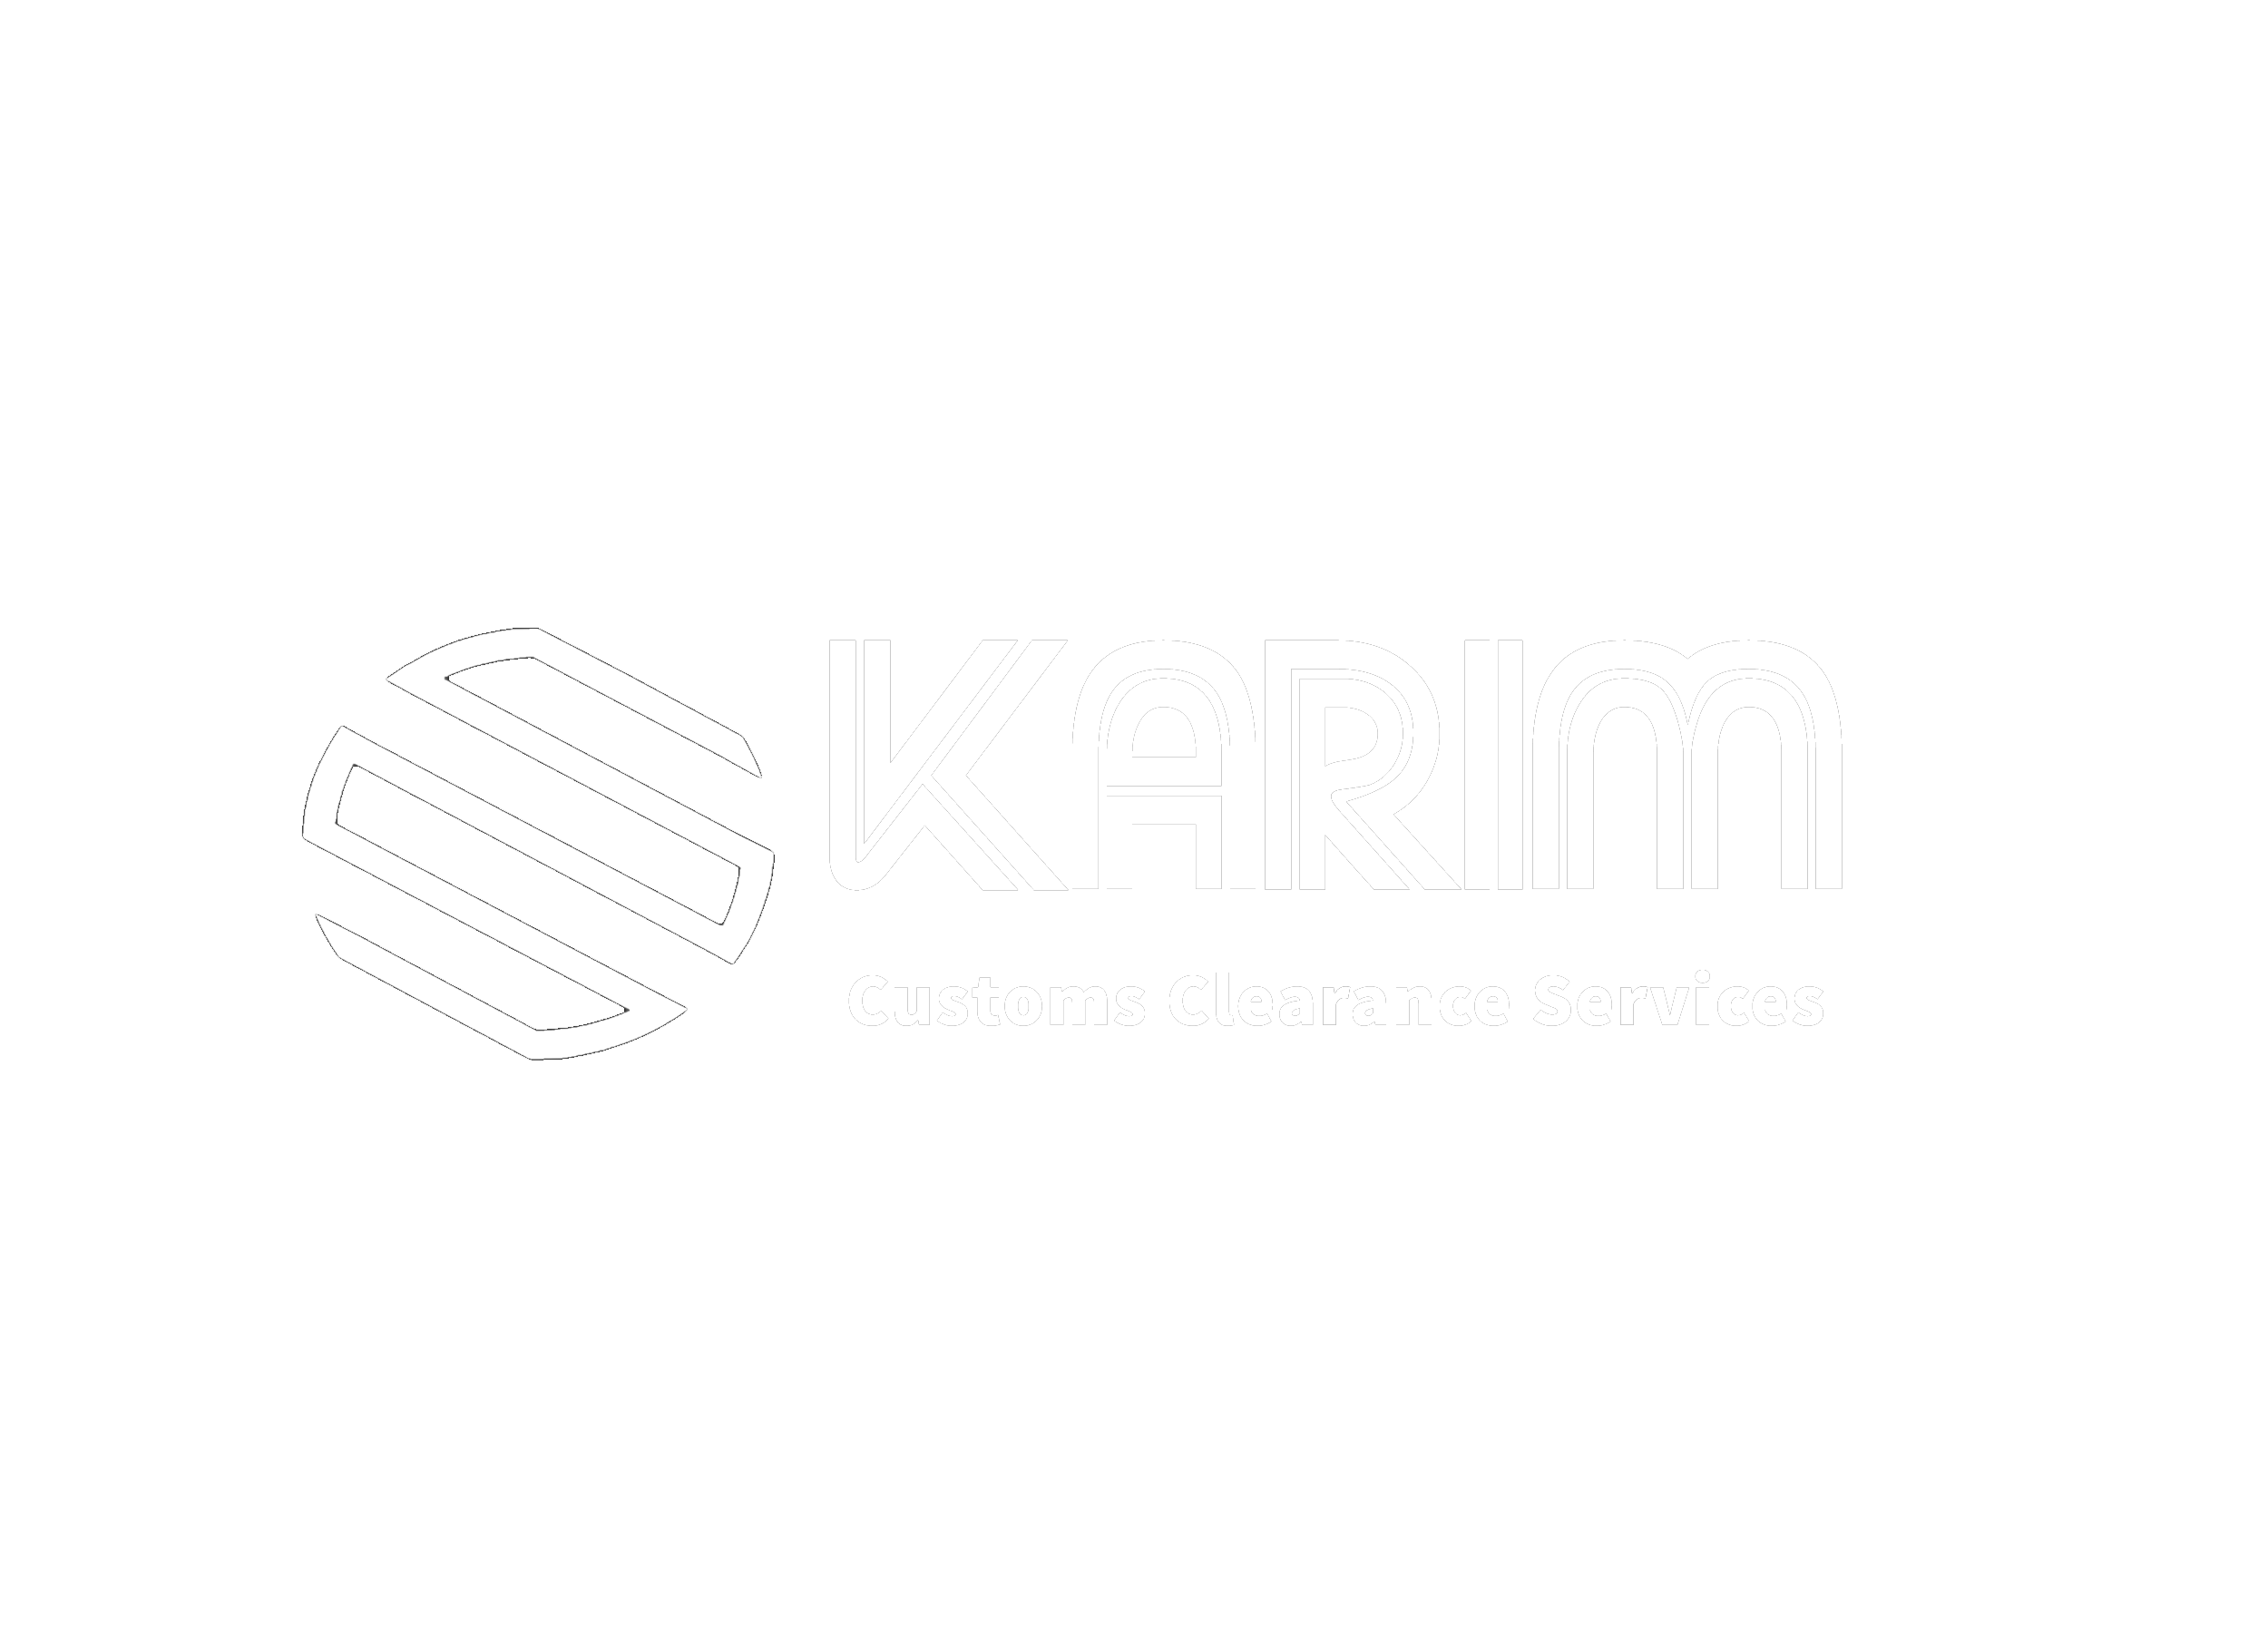 Karim For Customs Clearance